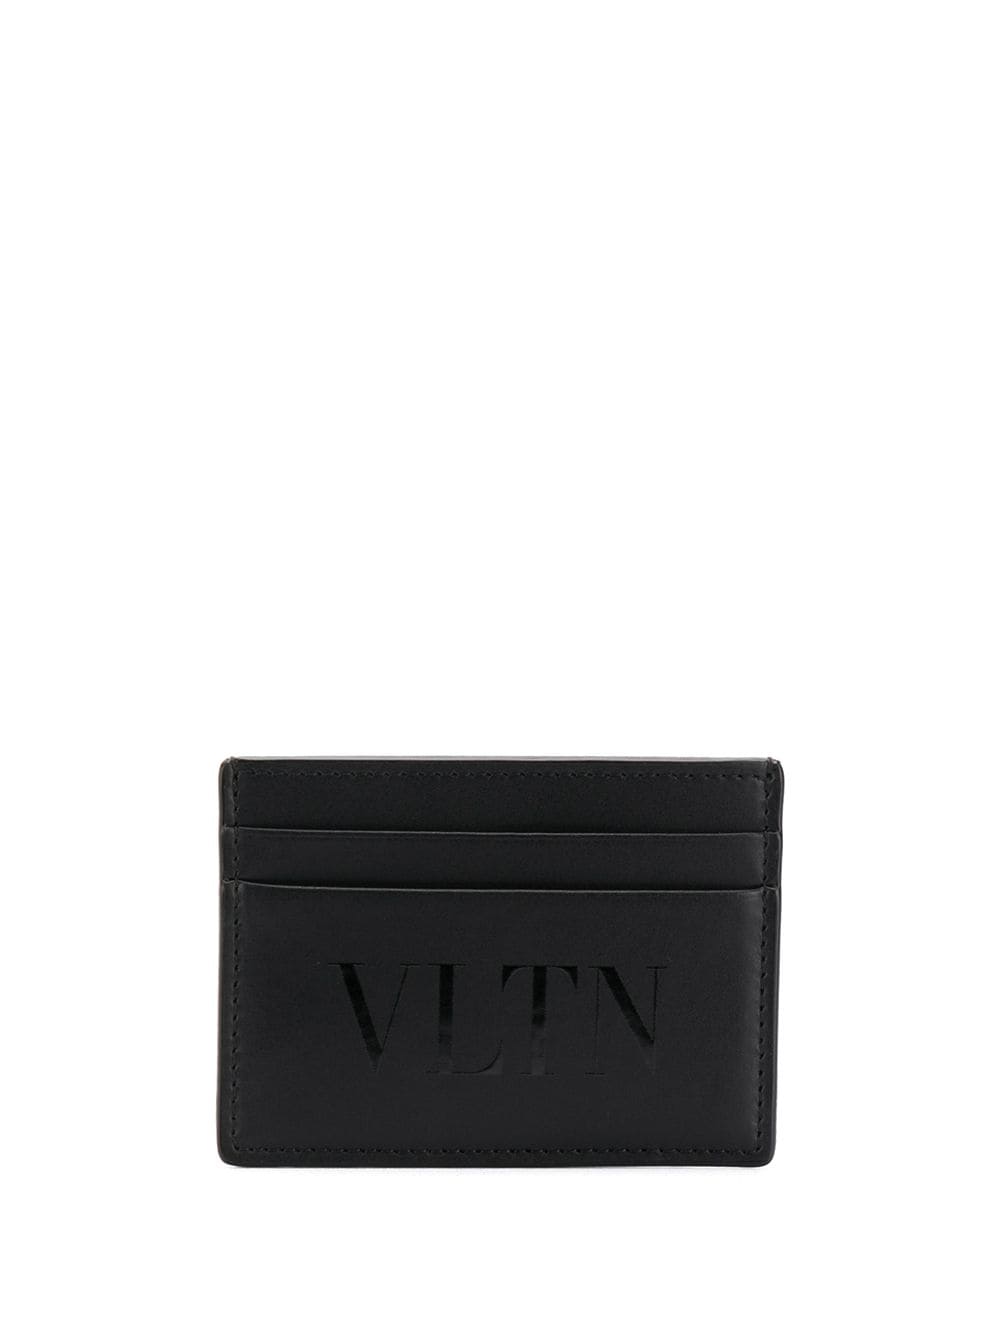 Portacarte in pelle nera con stampa logo VLTN